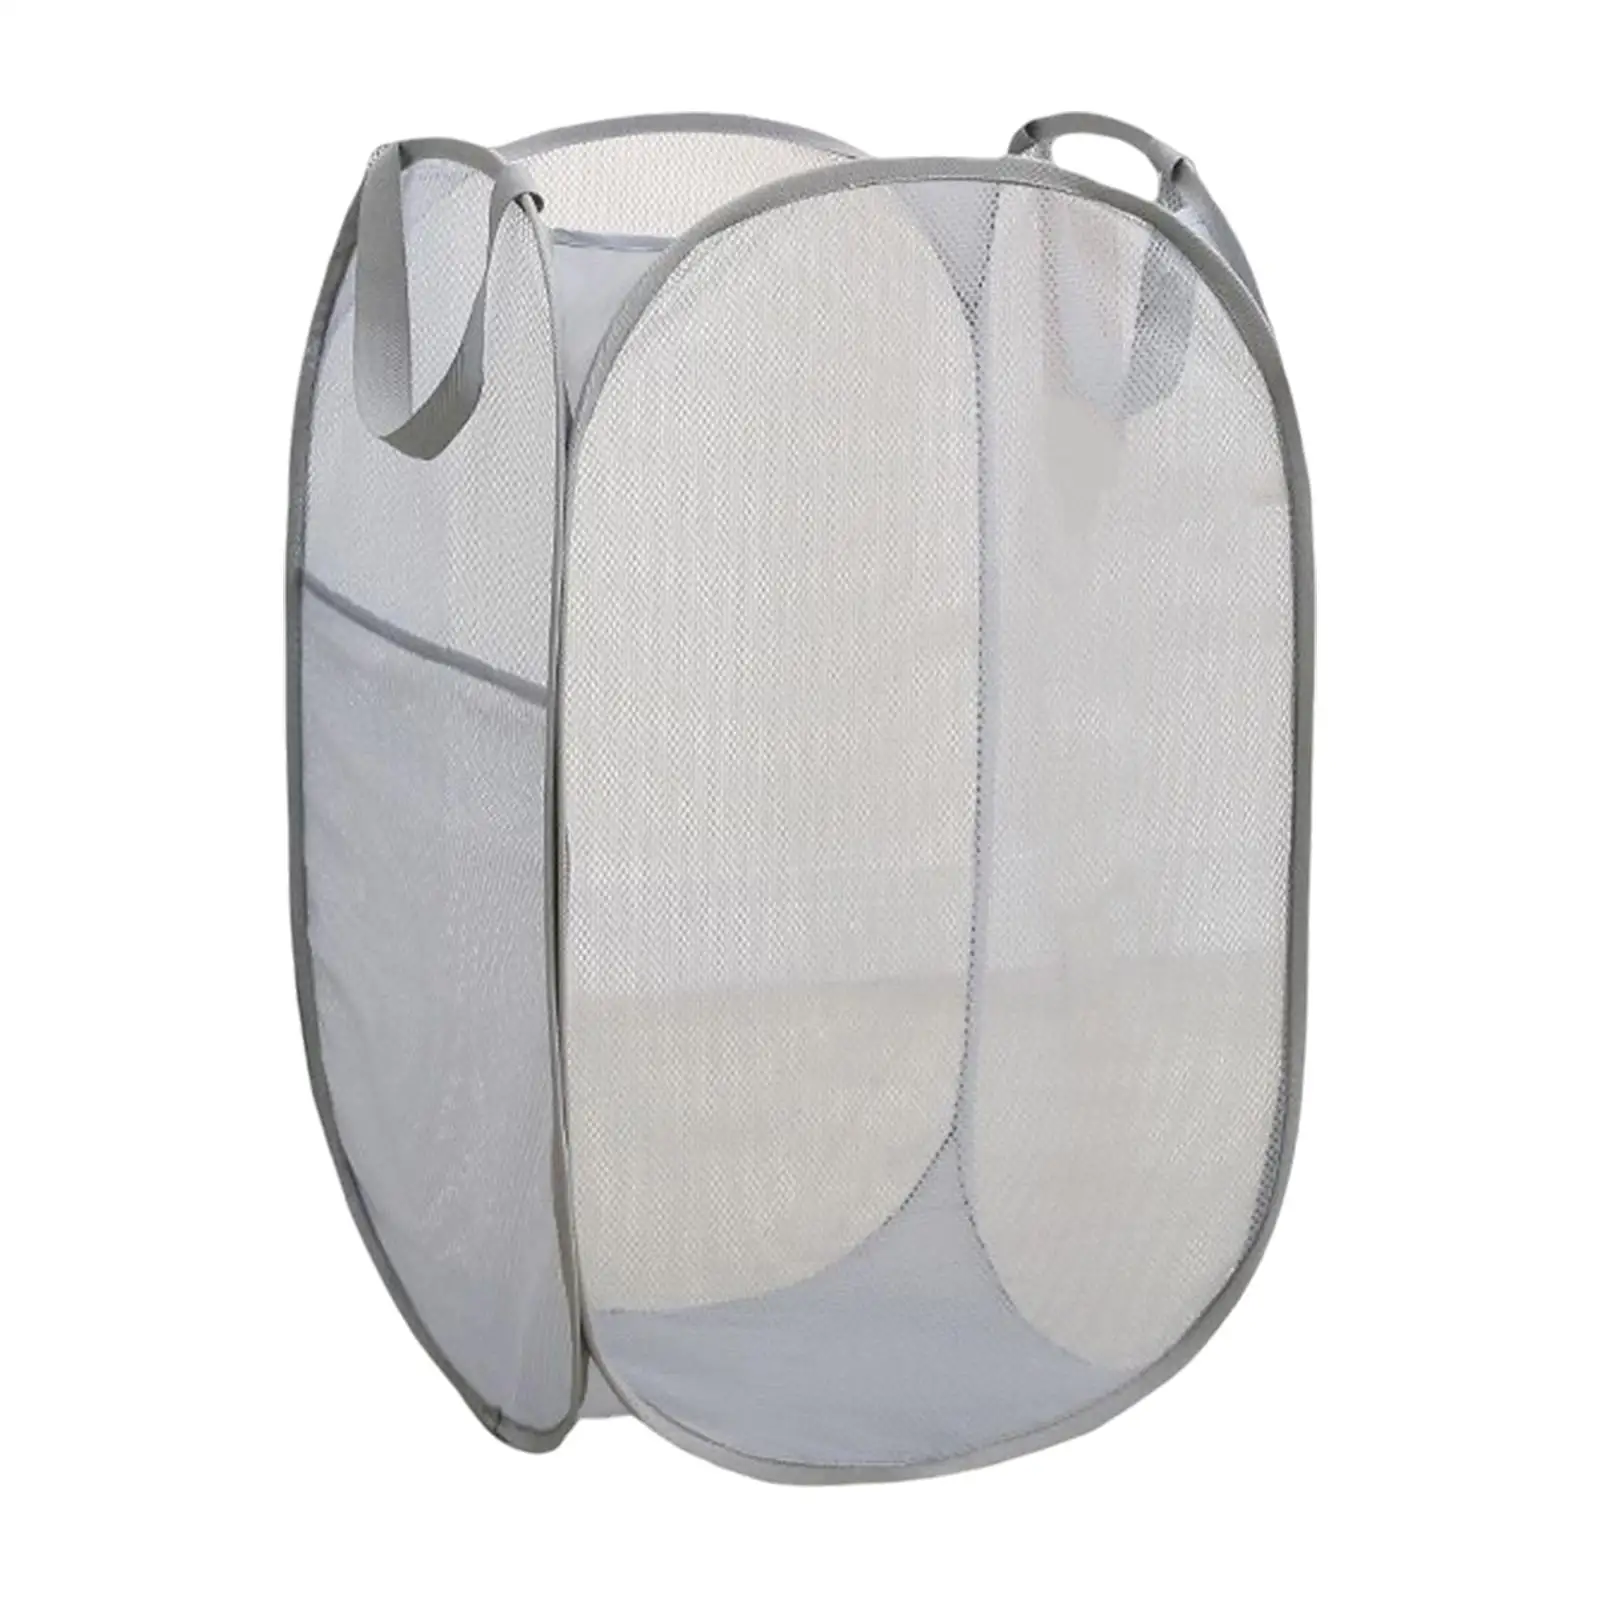 Folding Dirty Clothes Basket Multifunctional Nylon Mesh Large Portable Laundry Basket for Bathroom laundry Room Dormitory